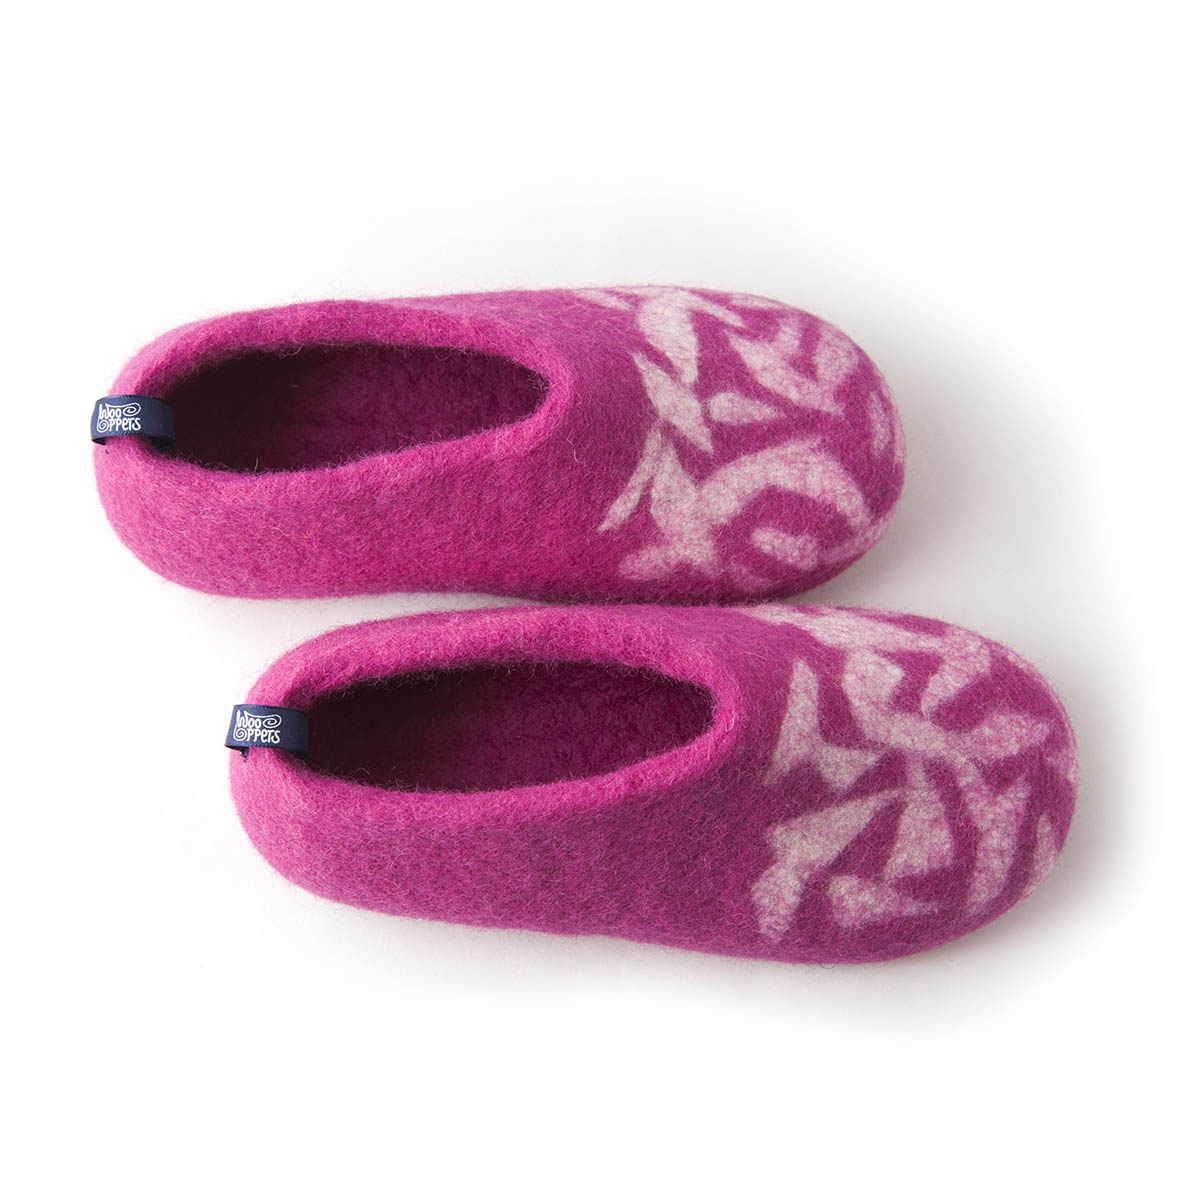 winter slippers for kids BITS fuchsia pink Kids Slippers - Wooppers for Kids, Kids Slippers - Wooppers for Kids, BITS